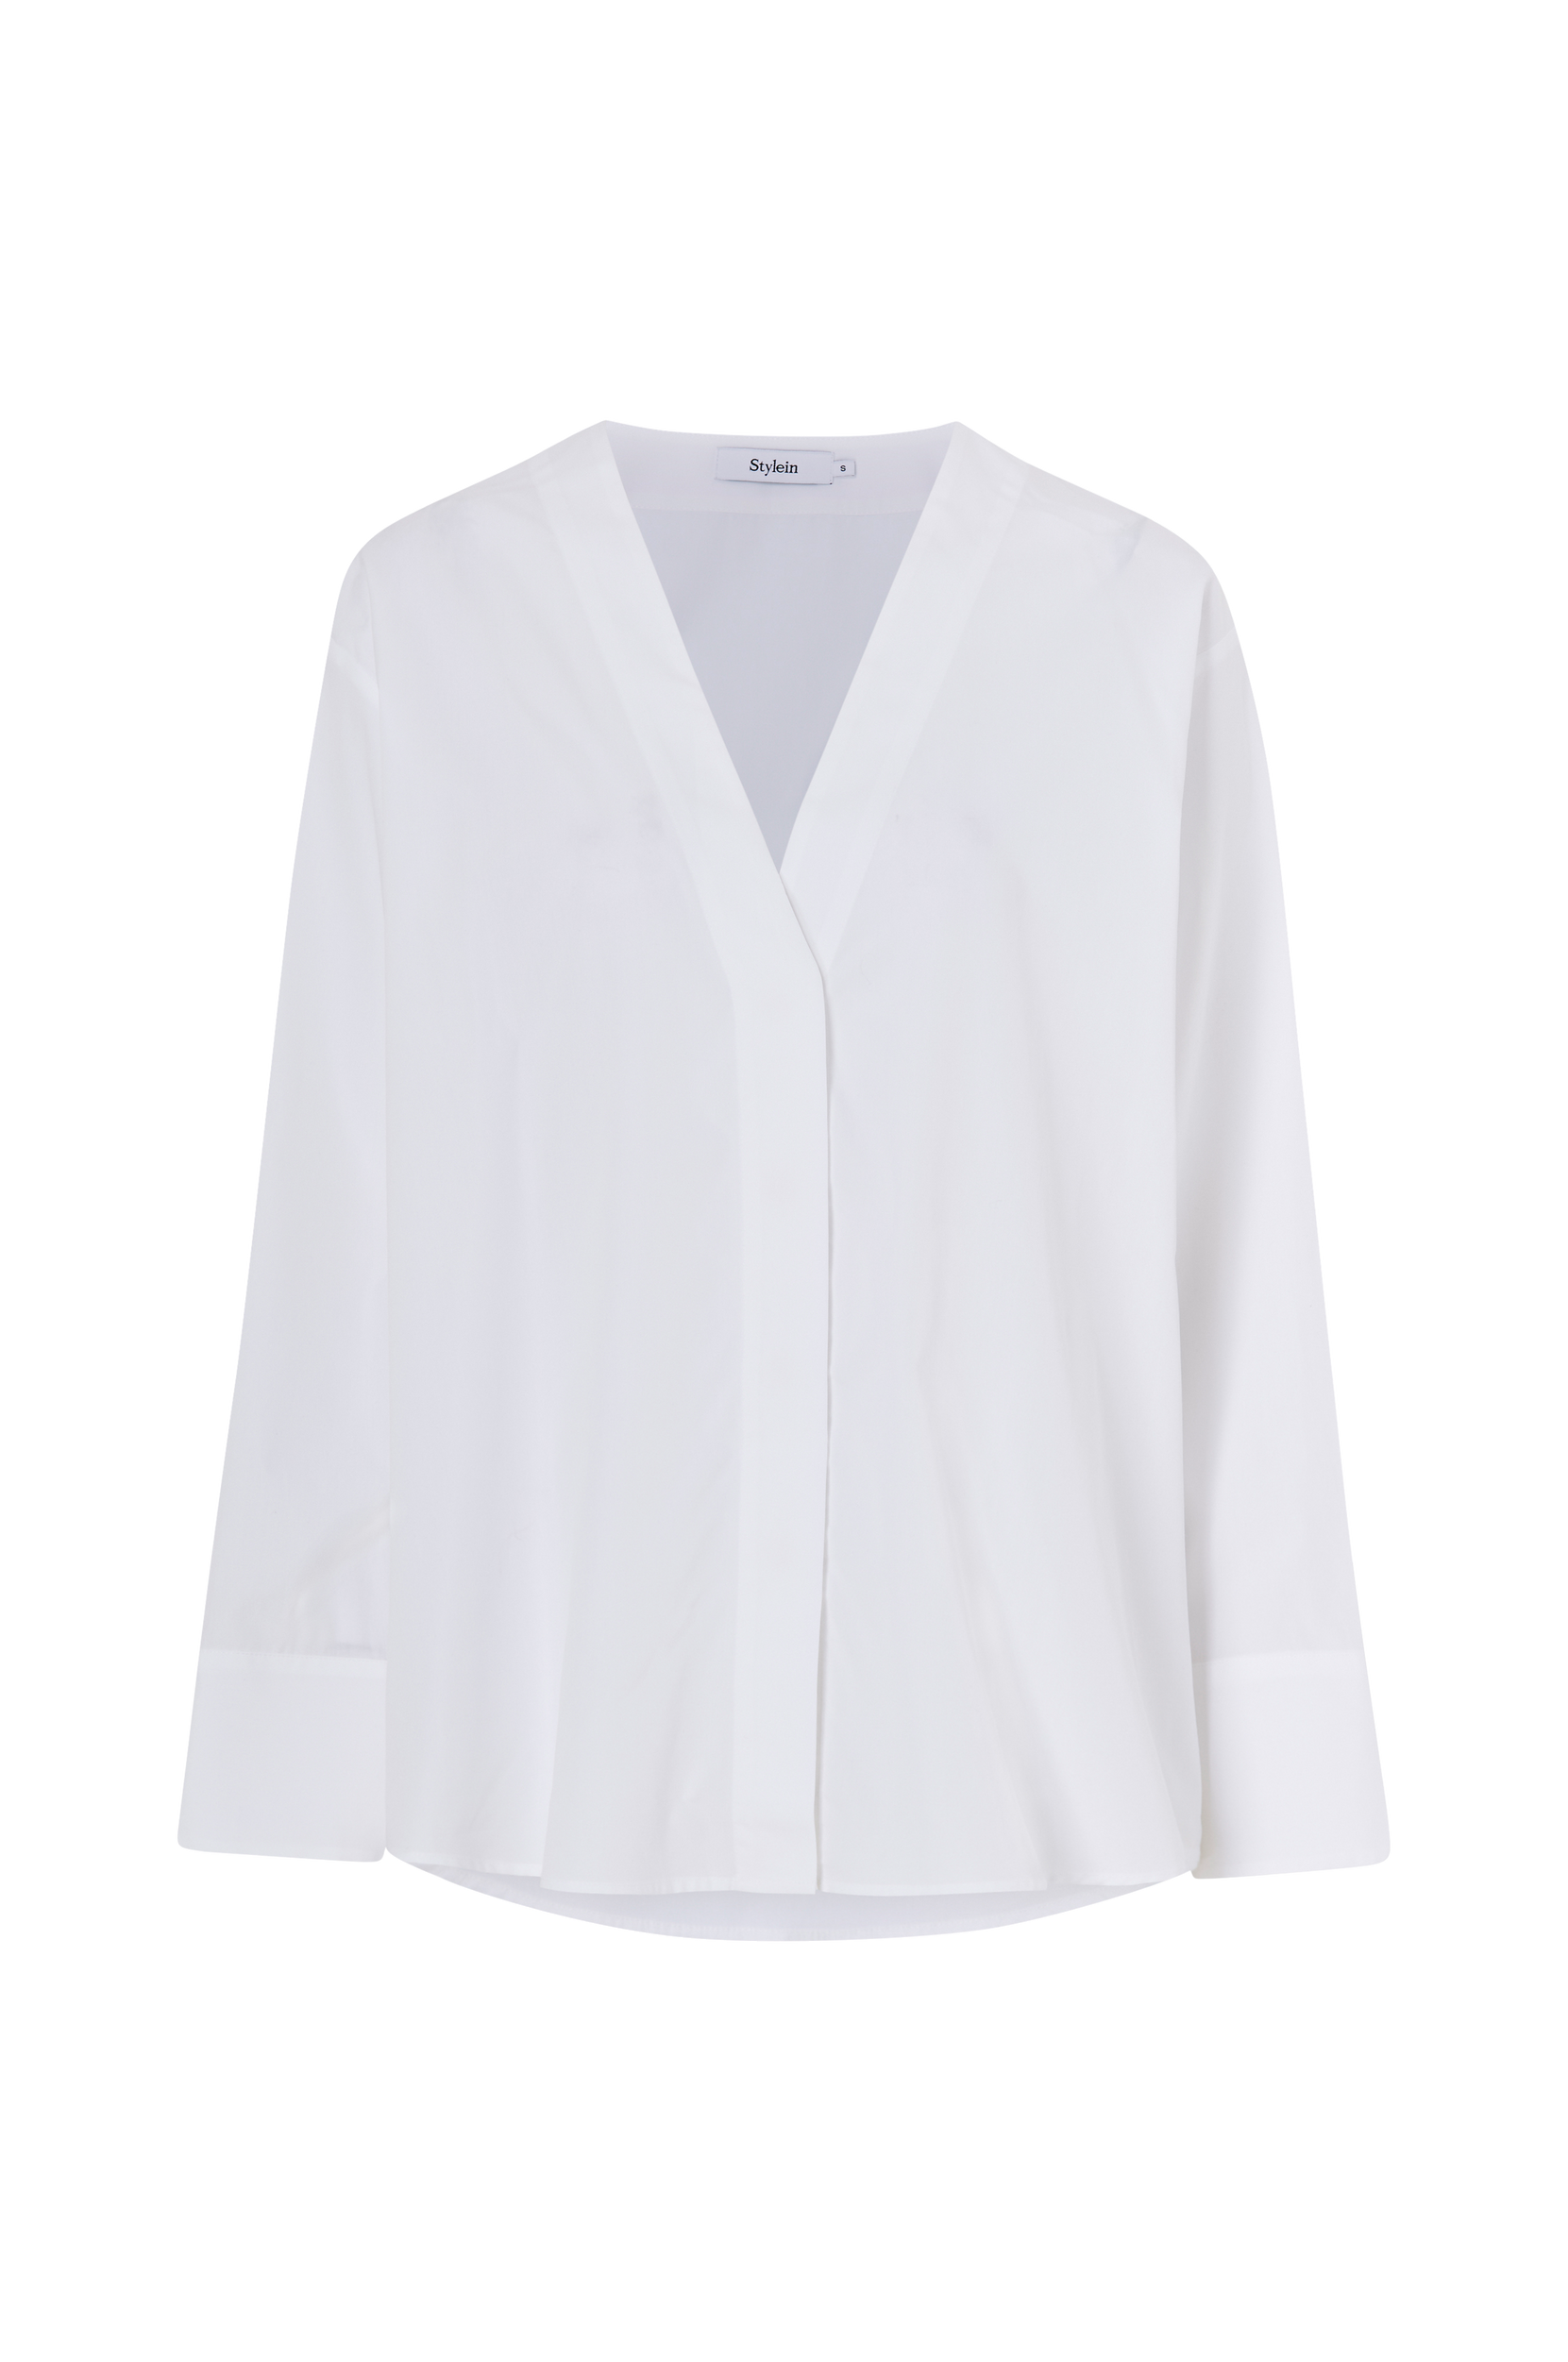 Stylein - Skjorte Java Shirt - Hvid - 30/32